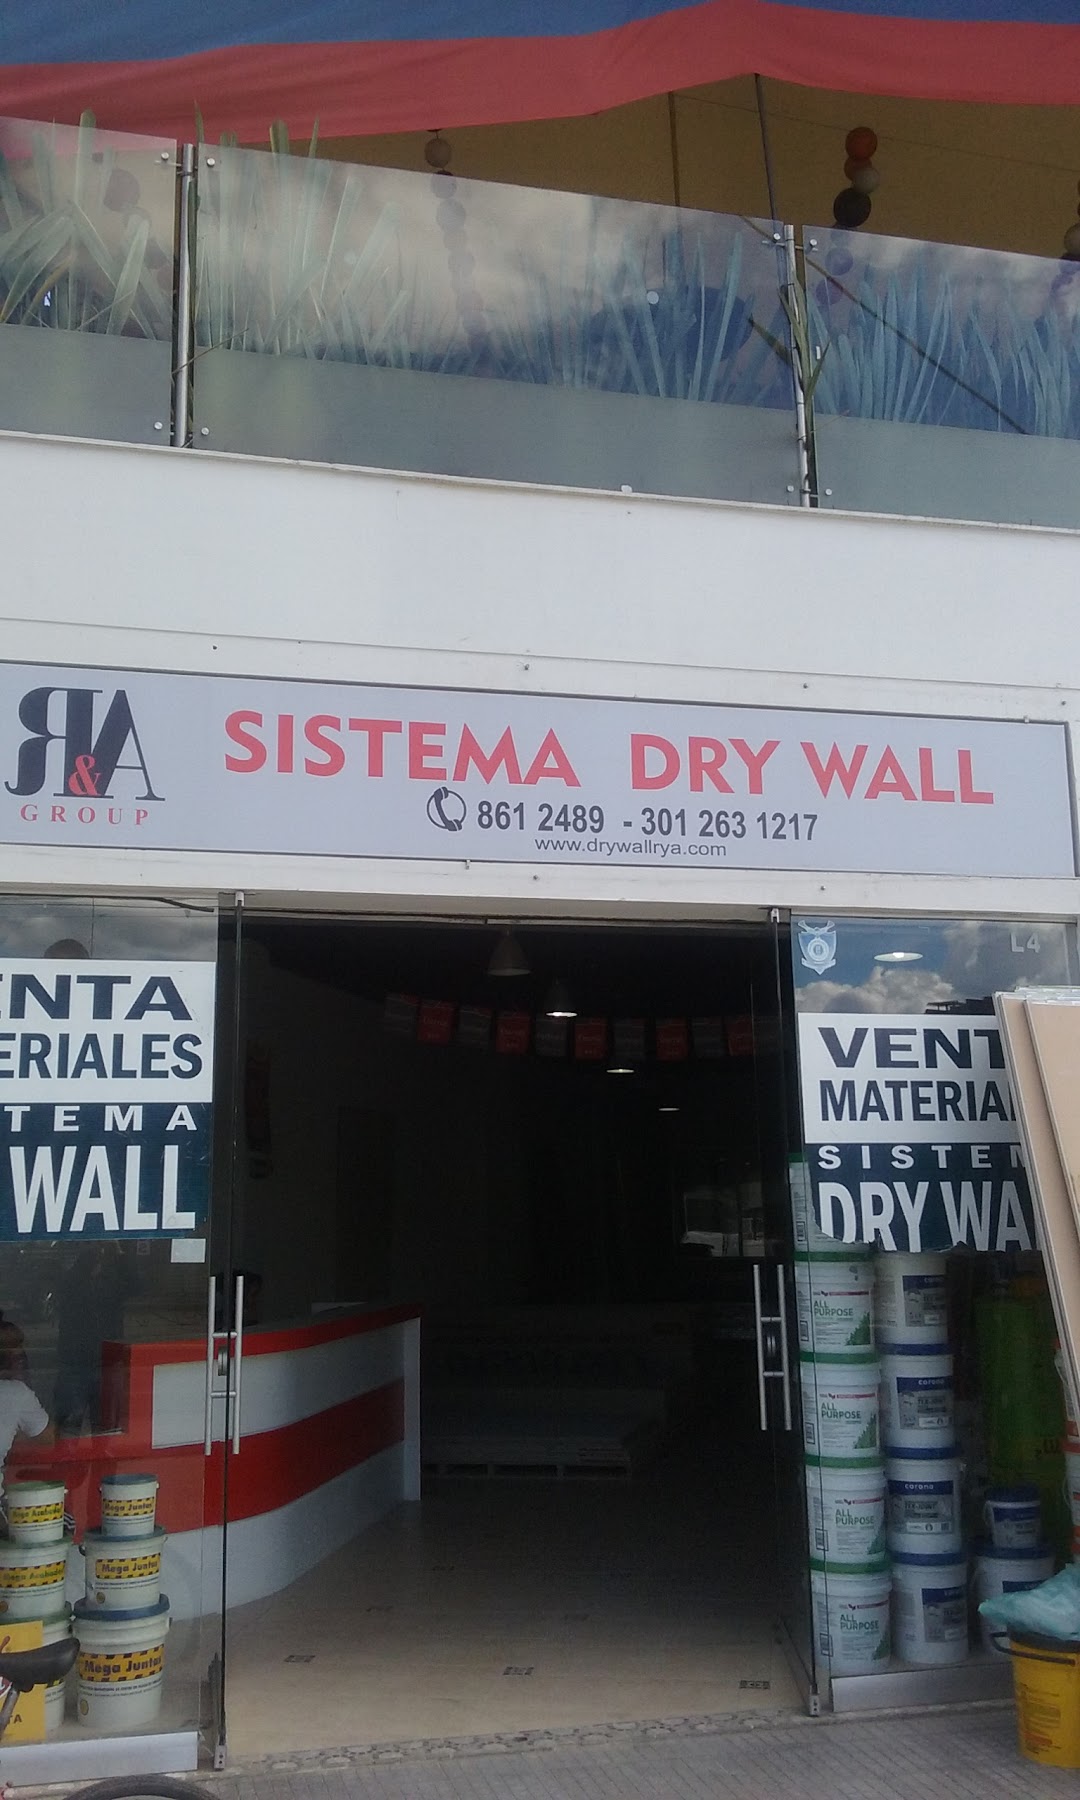 Drywall - R&A Group CHIA